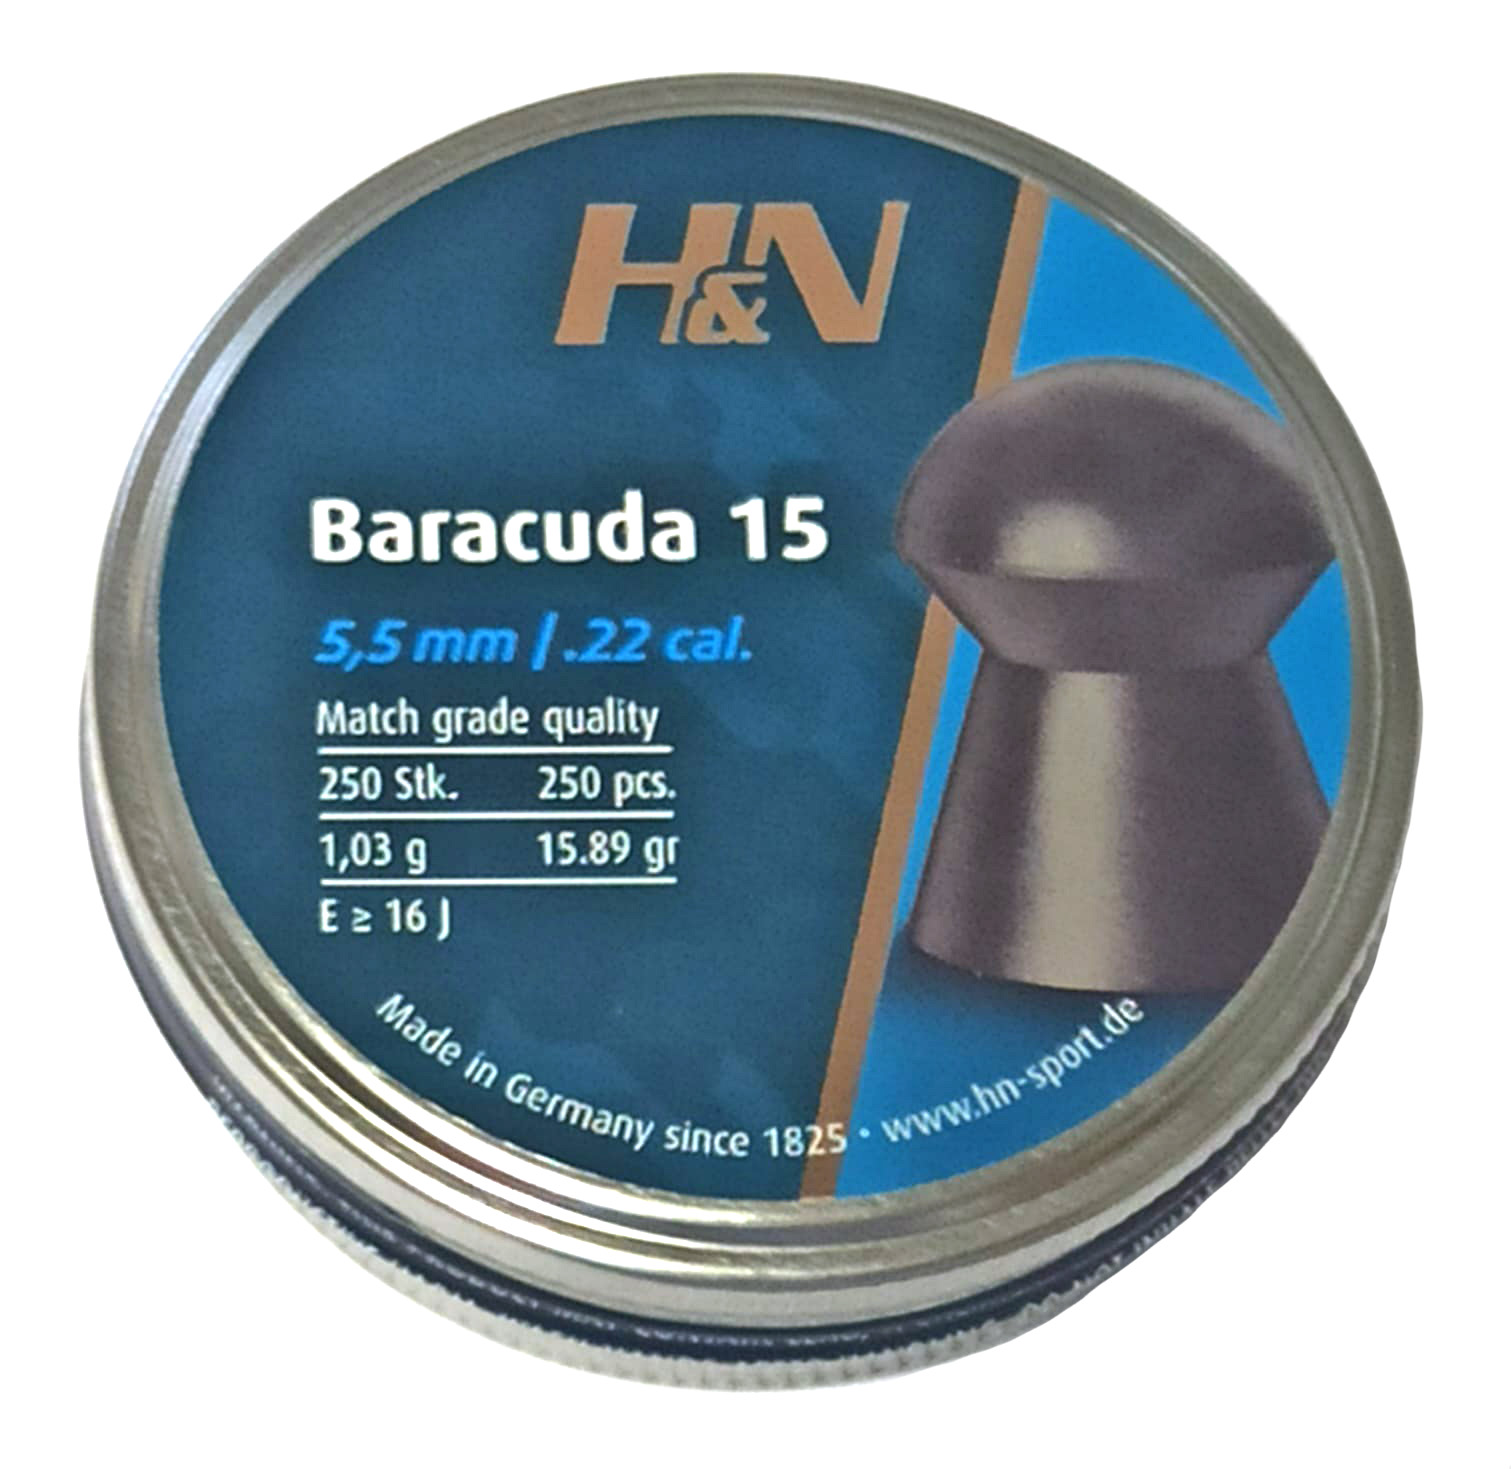 Пули H&N Baracuda 15 5,5мм 1,03г (250 шт)